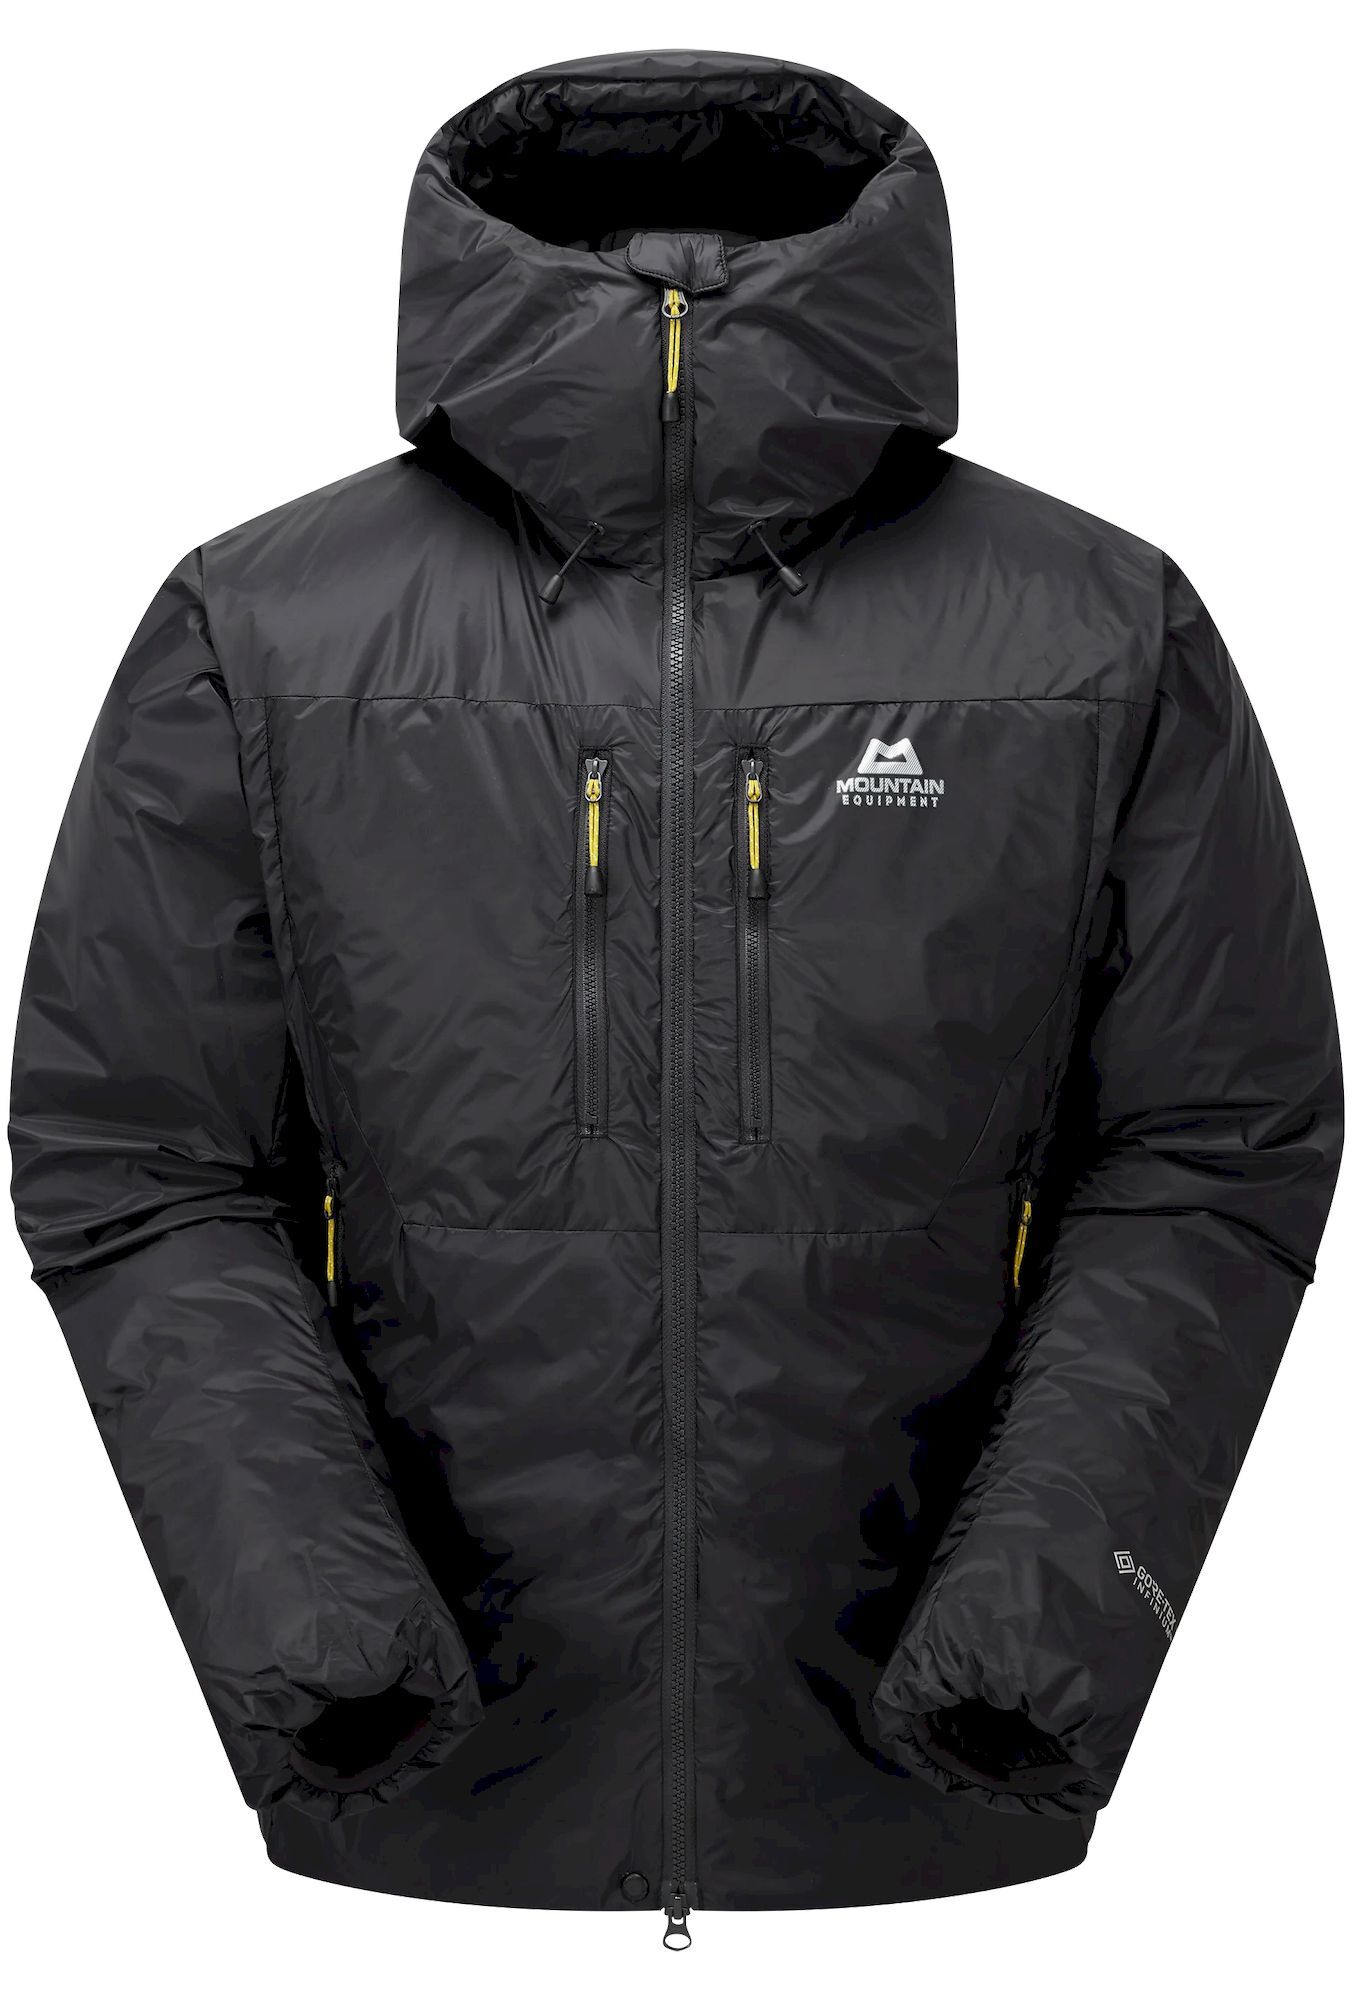 Mountain Equipment Kryos Jacket - Down jacket - Men's